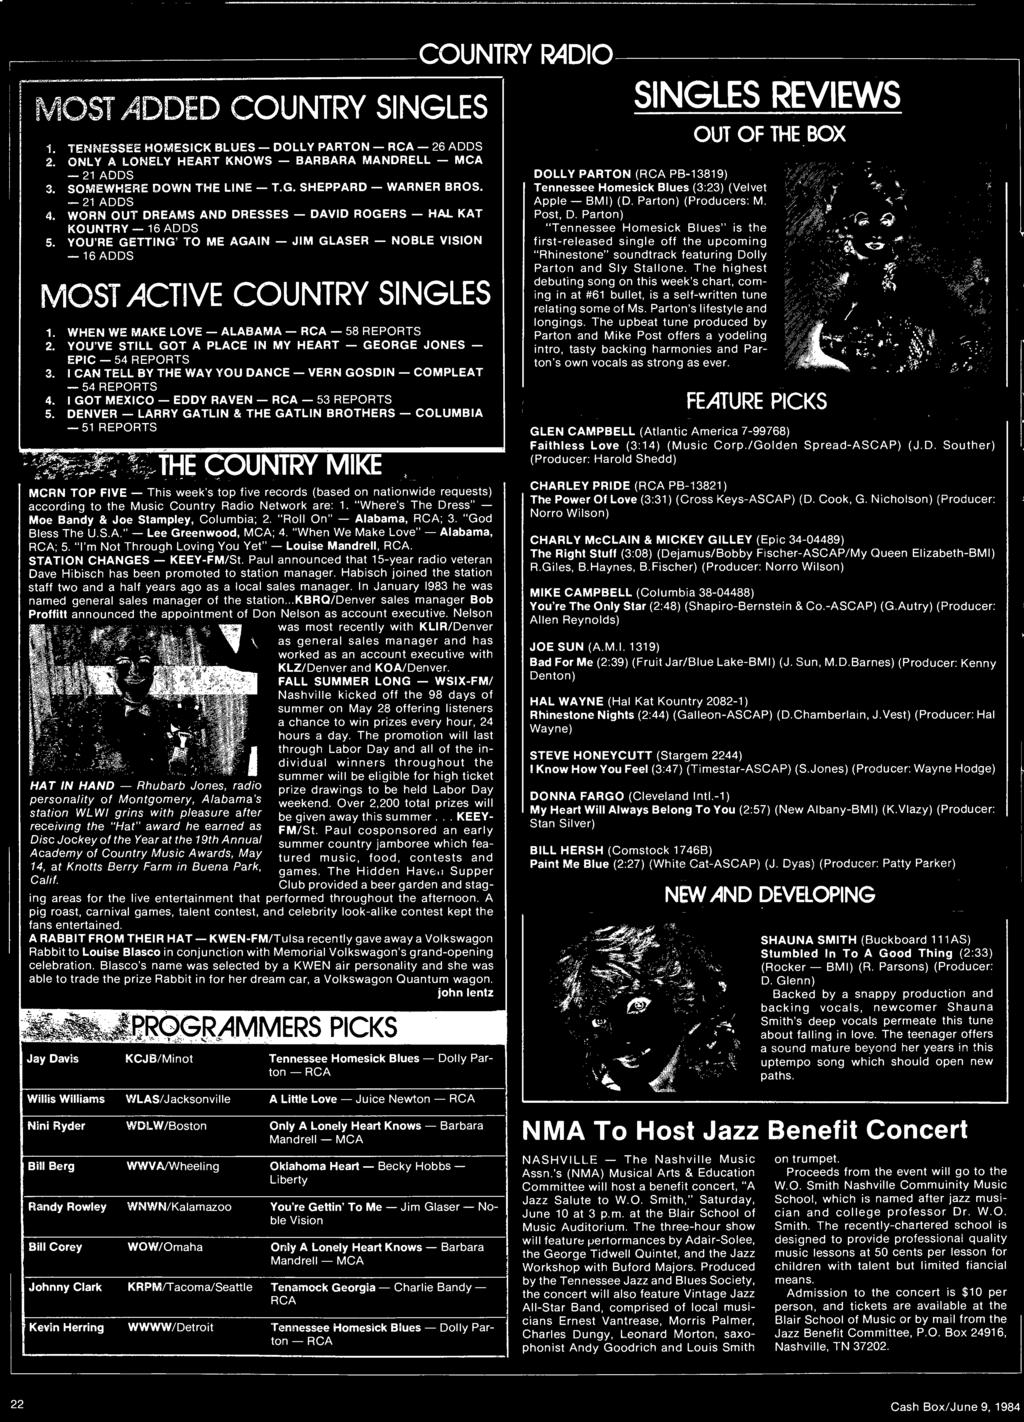 Where s The Dress Moe Bandy & Joe Stampley, Columbia; 2. Roll Alabama, RCA; 3. "God Bless The U.S.A. Lee Greenwood, MCA; 4. When We Make Love Alabama, RCA; 5.